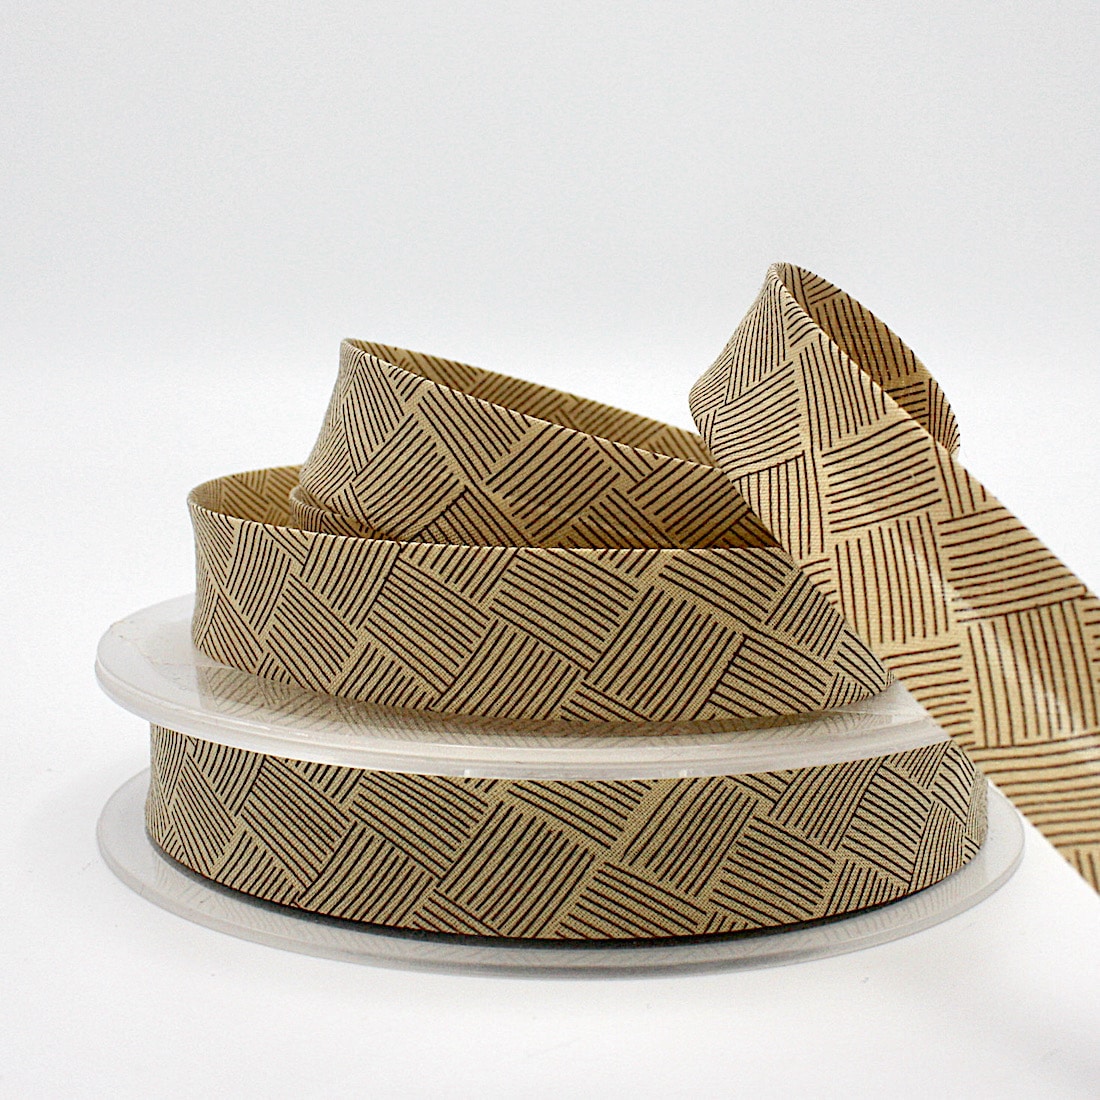 25m roll of Basket Weave Bias Binding Tape with 18mm width in Tan